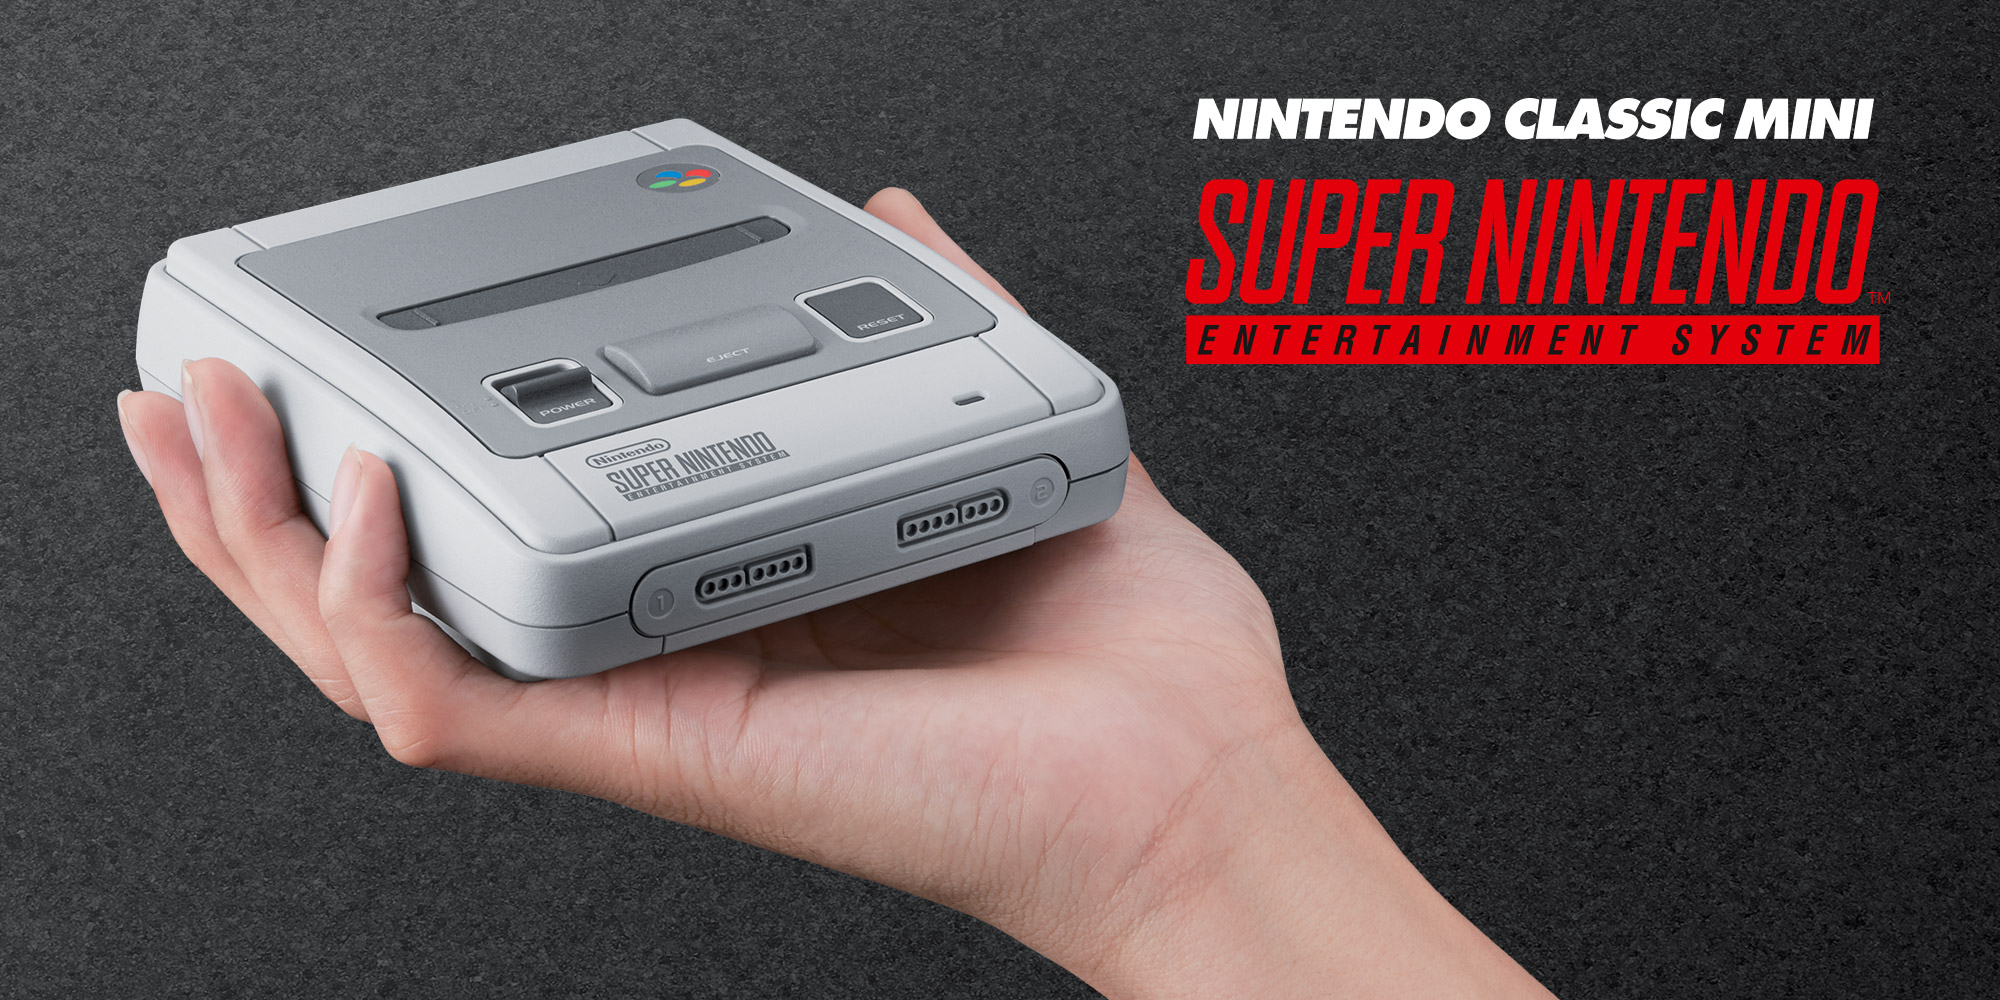 Nintendo anuncia la consola Nintendo Classic Mini: Super Nintendo Entertainment System